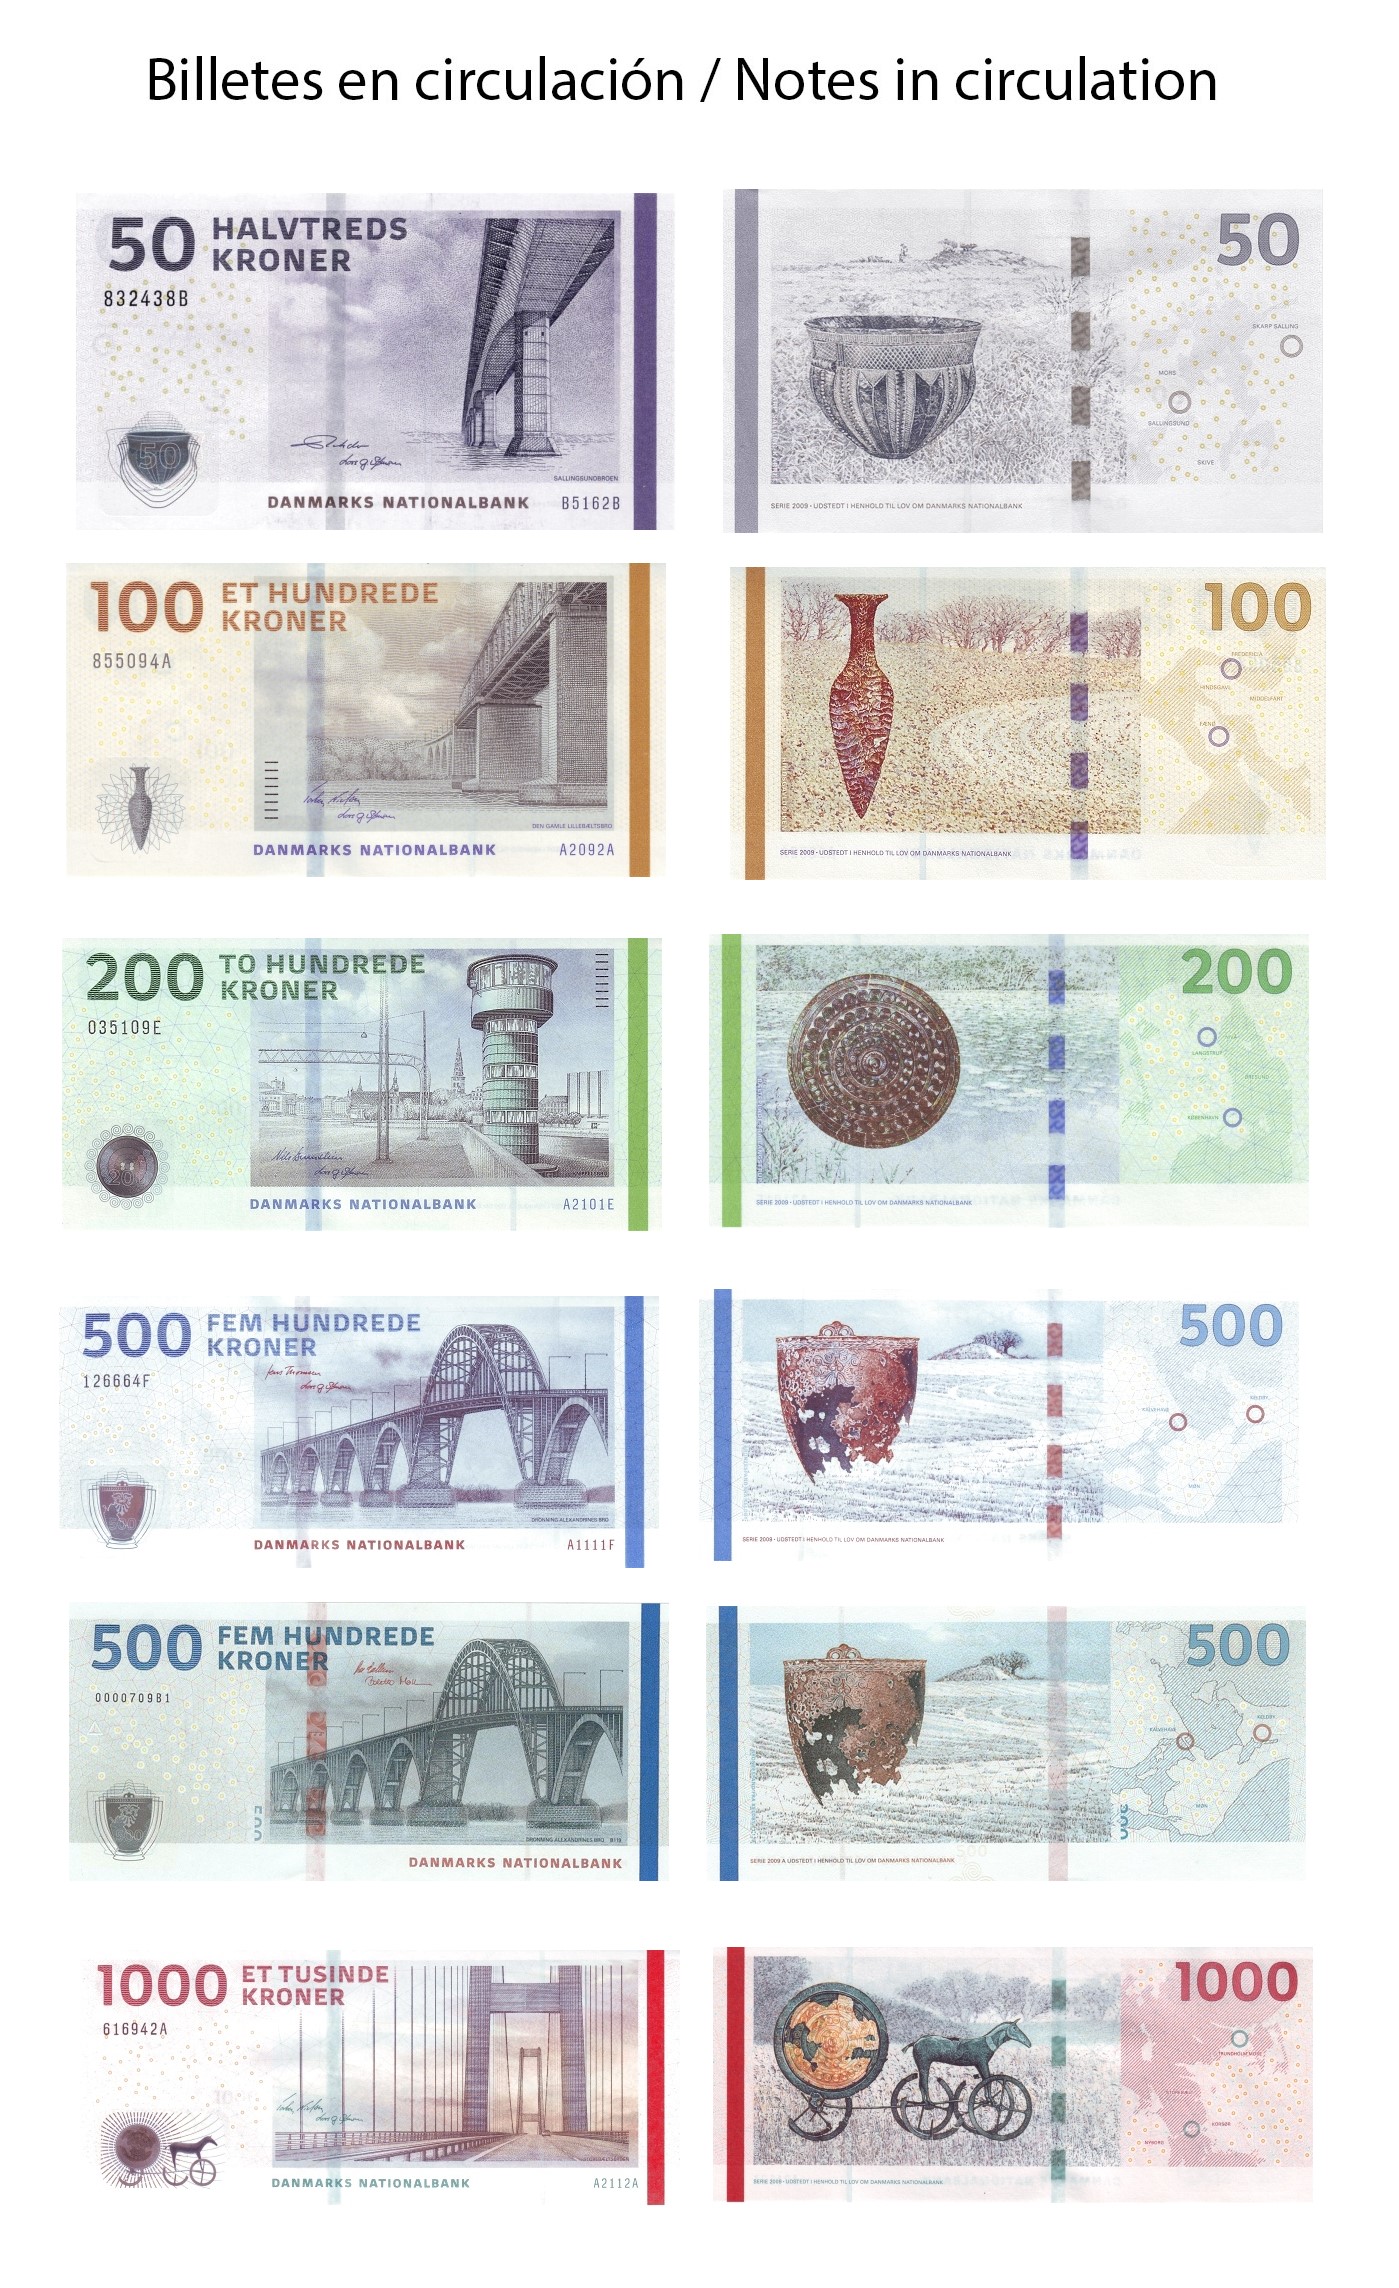 Danish Krone banknotes in circulation